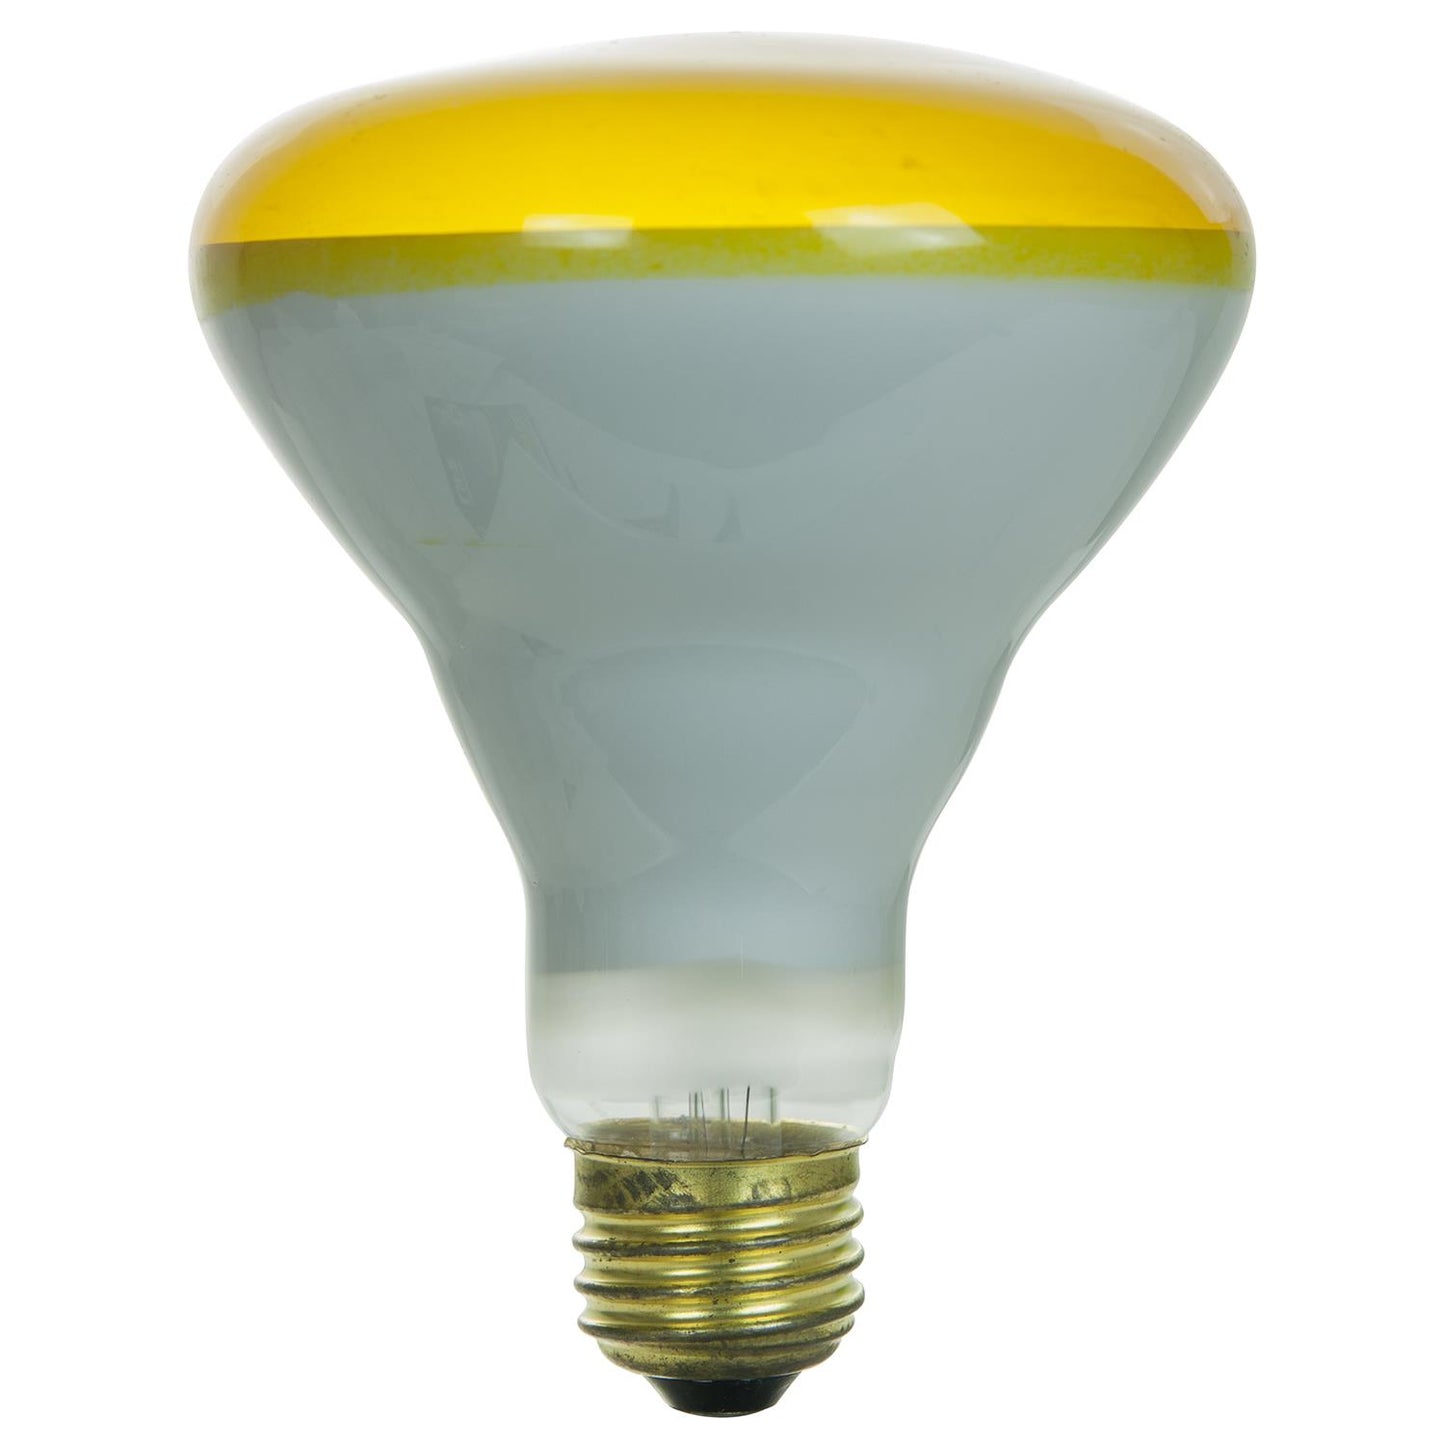 Sunlite 65 Watt BR30 Colored Reflector, Medium Base, Yellow